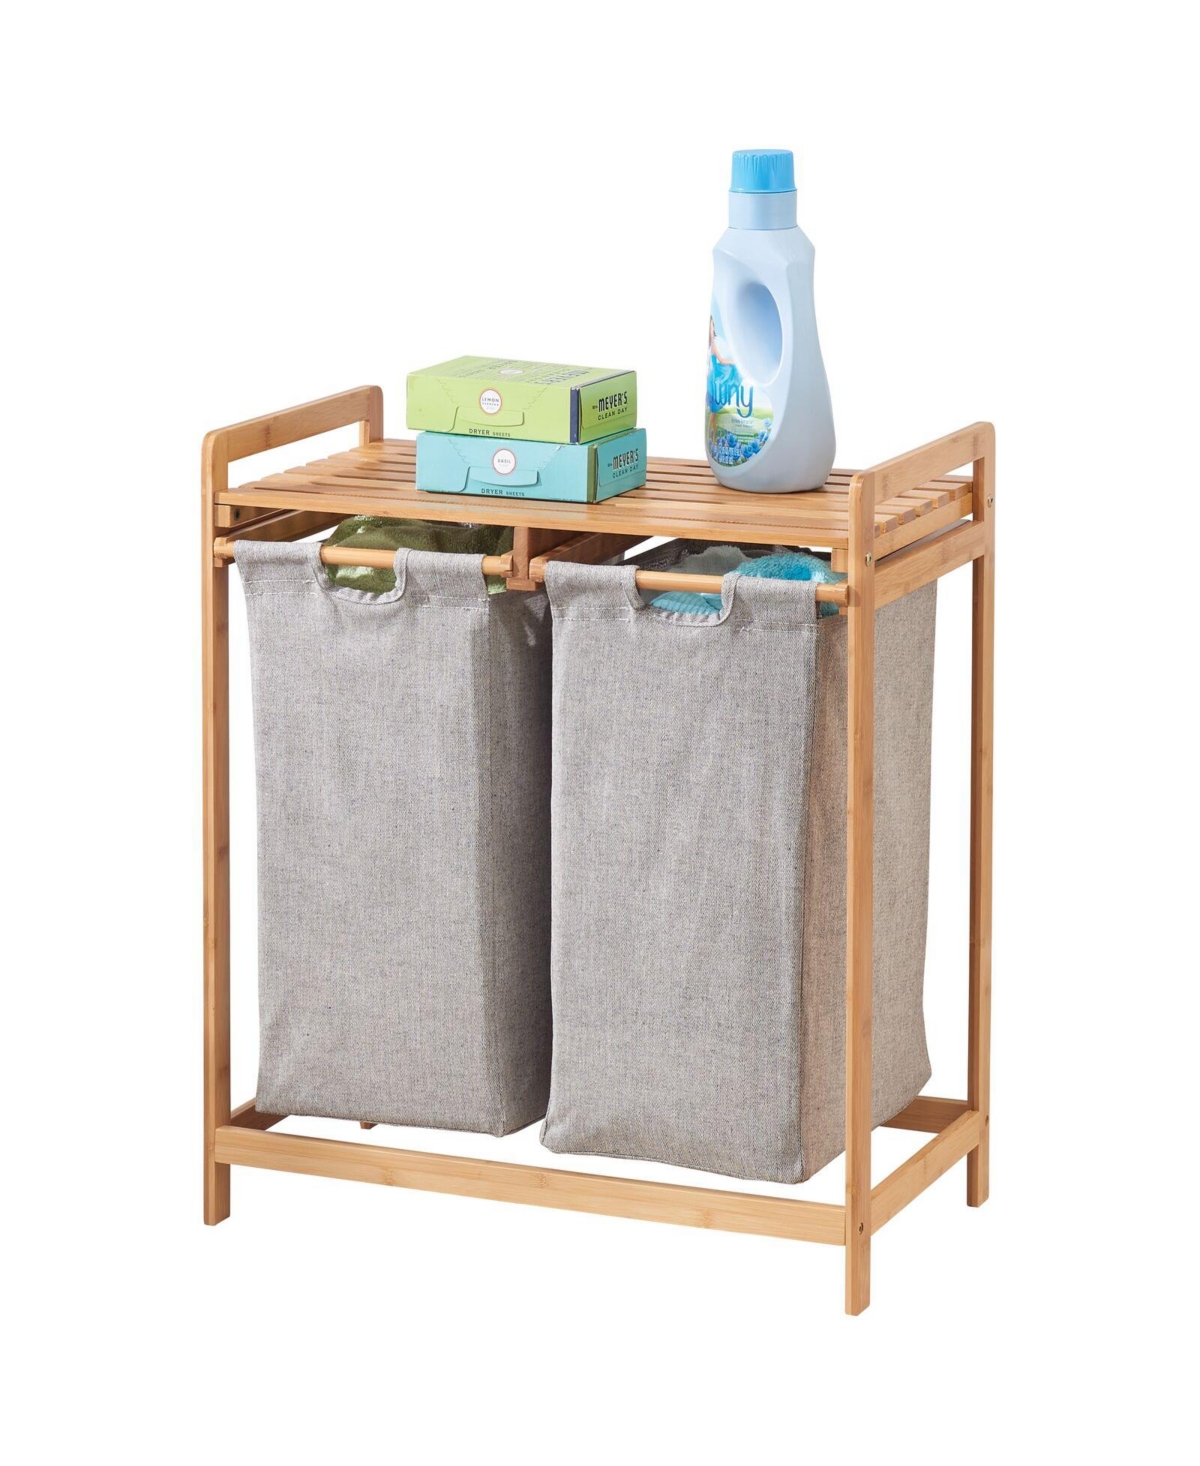 Bamboo Double Laundry Hamper, Large Capacity - Vintage